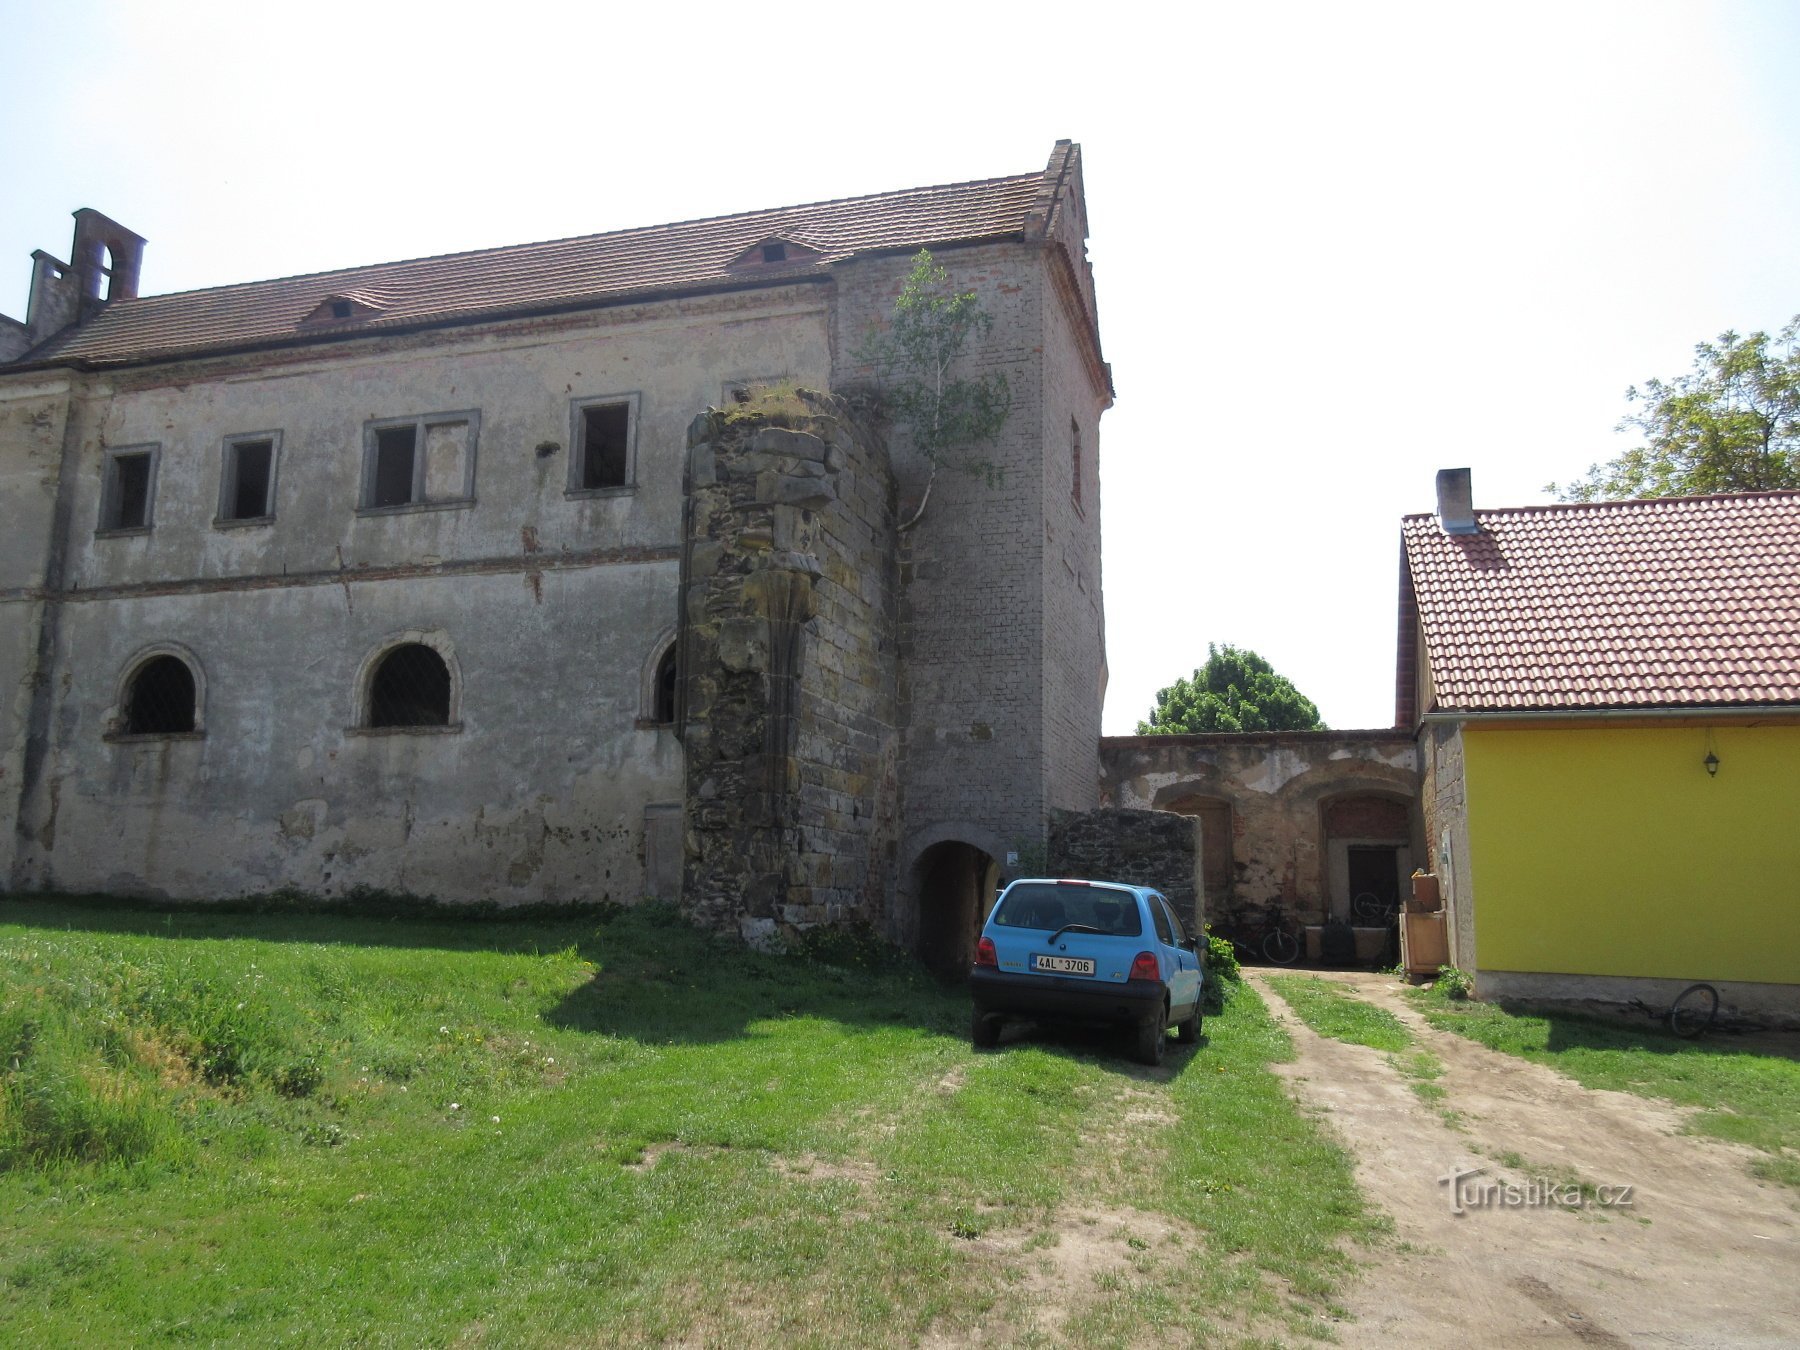 Klášterní Skalice - ruinerna av ett kloster